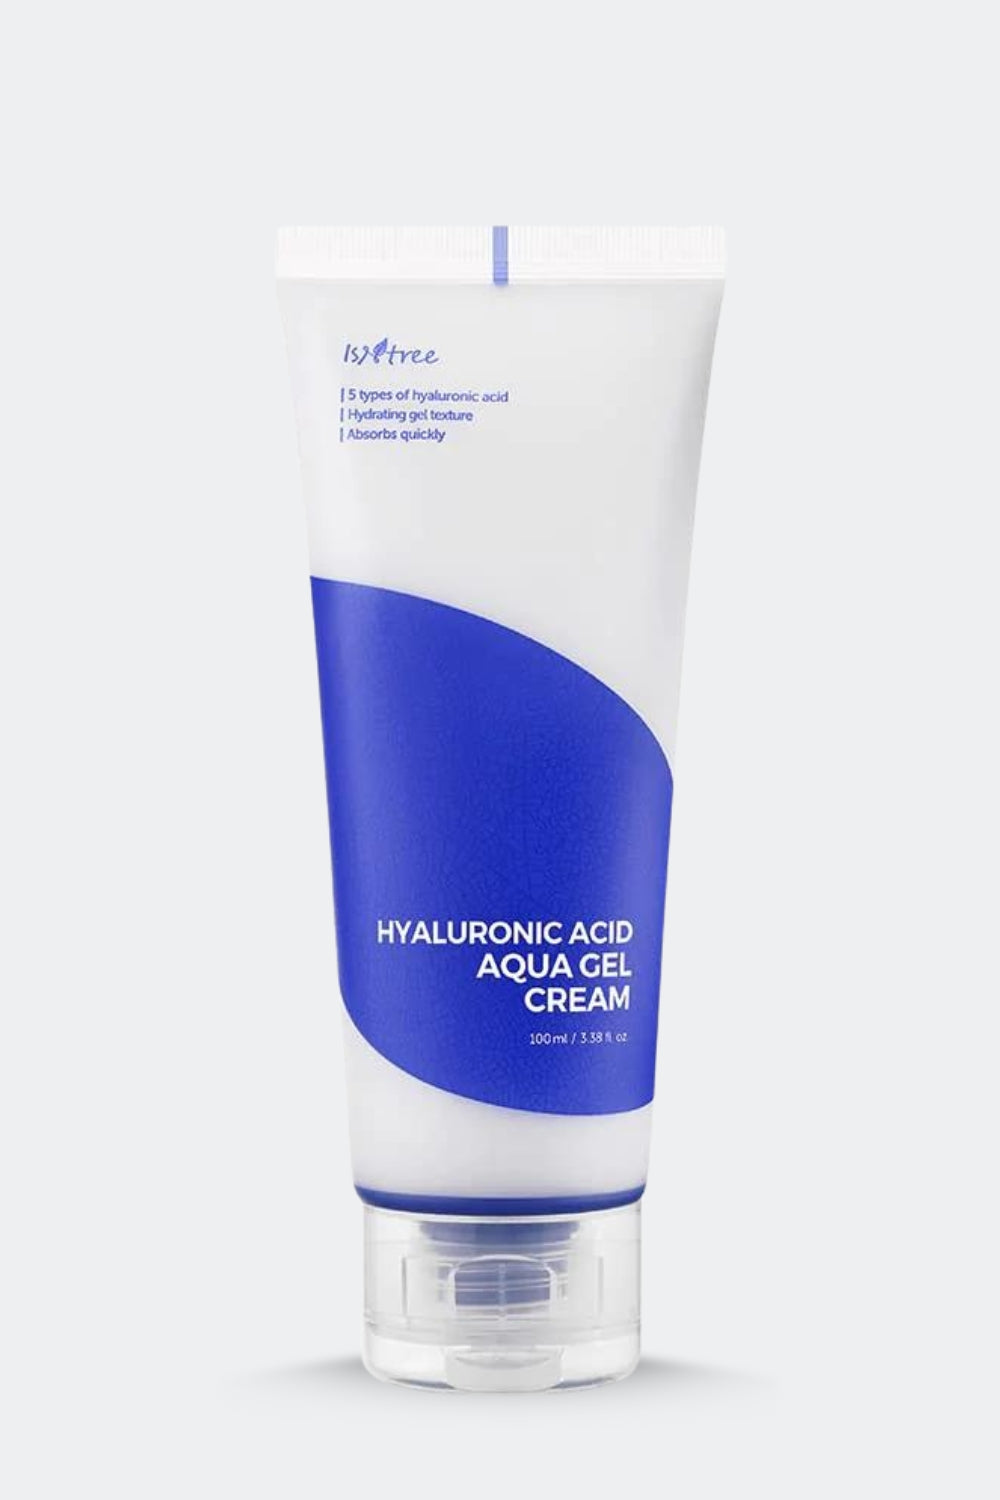 ISNTREE - Hyaluronic Acid Aqua Gel Cream - 100ml